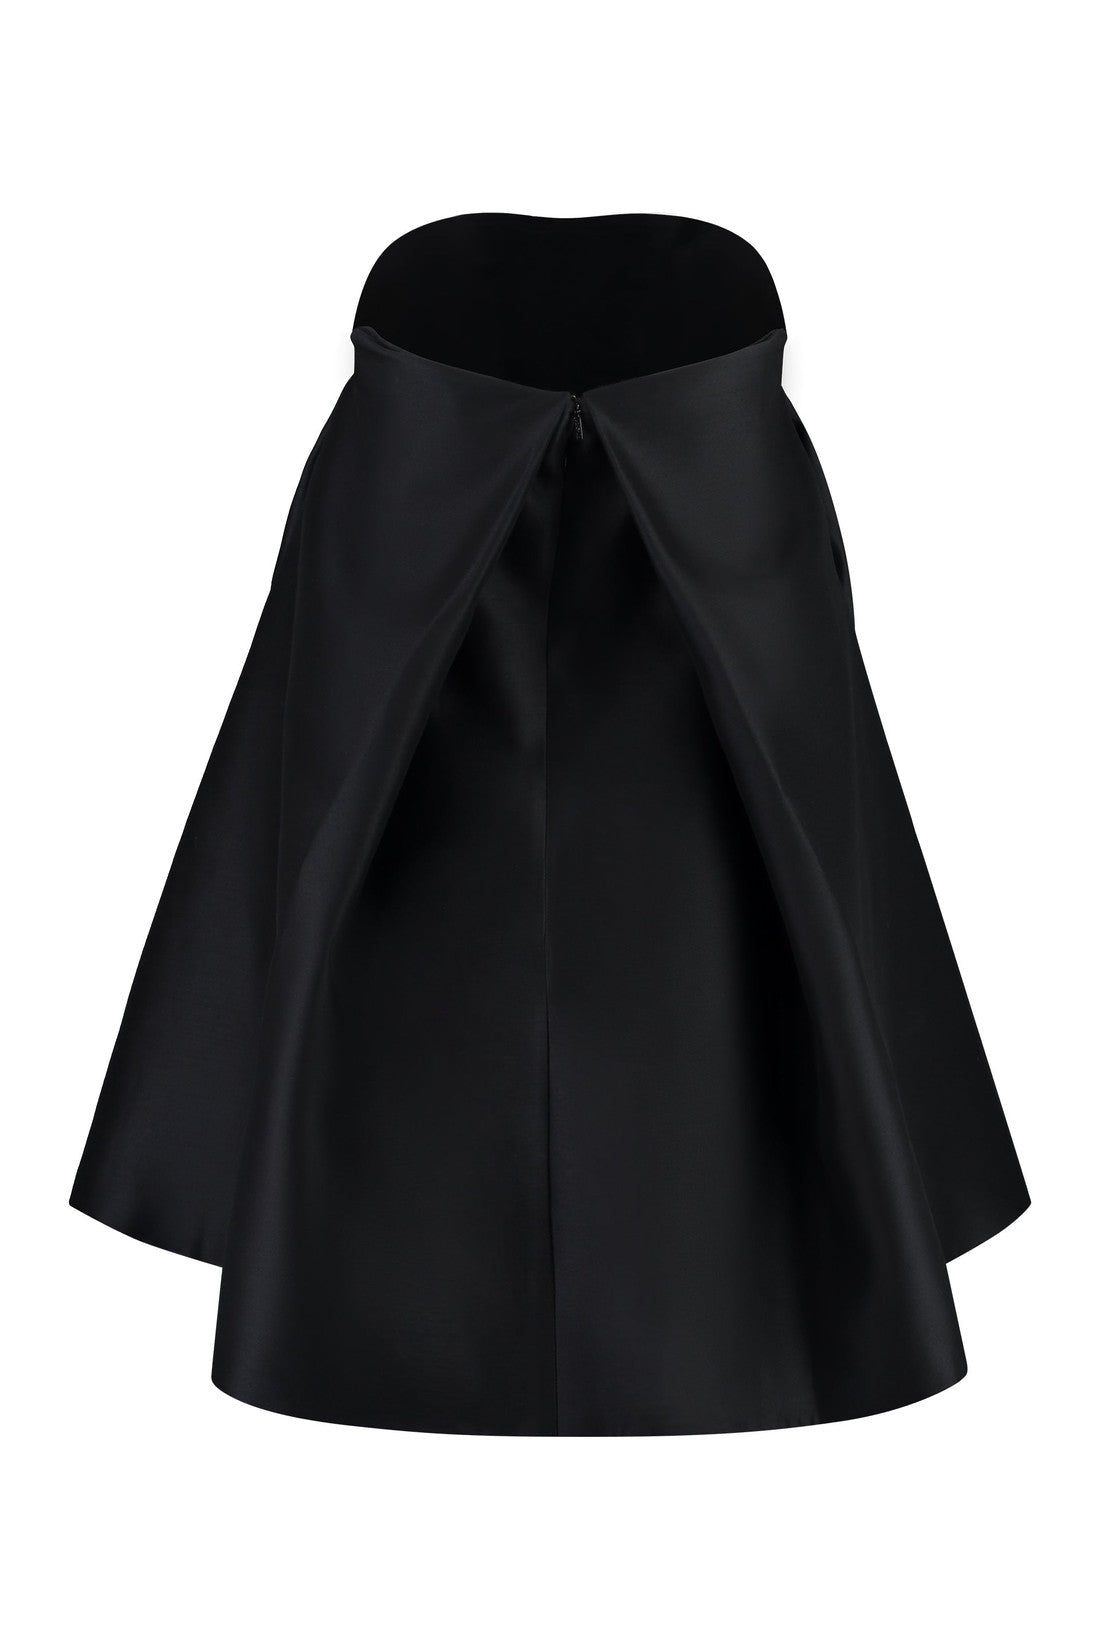 Versace-OUTLET-SALE-Sleeveless dress-ARCHIVIST